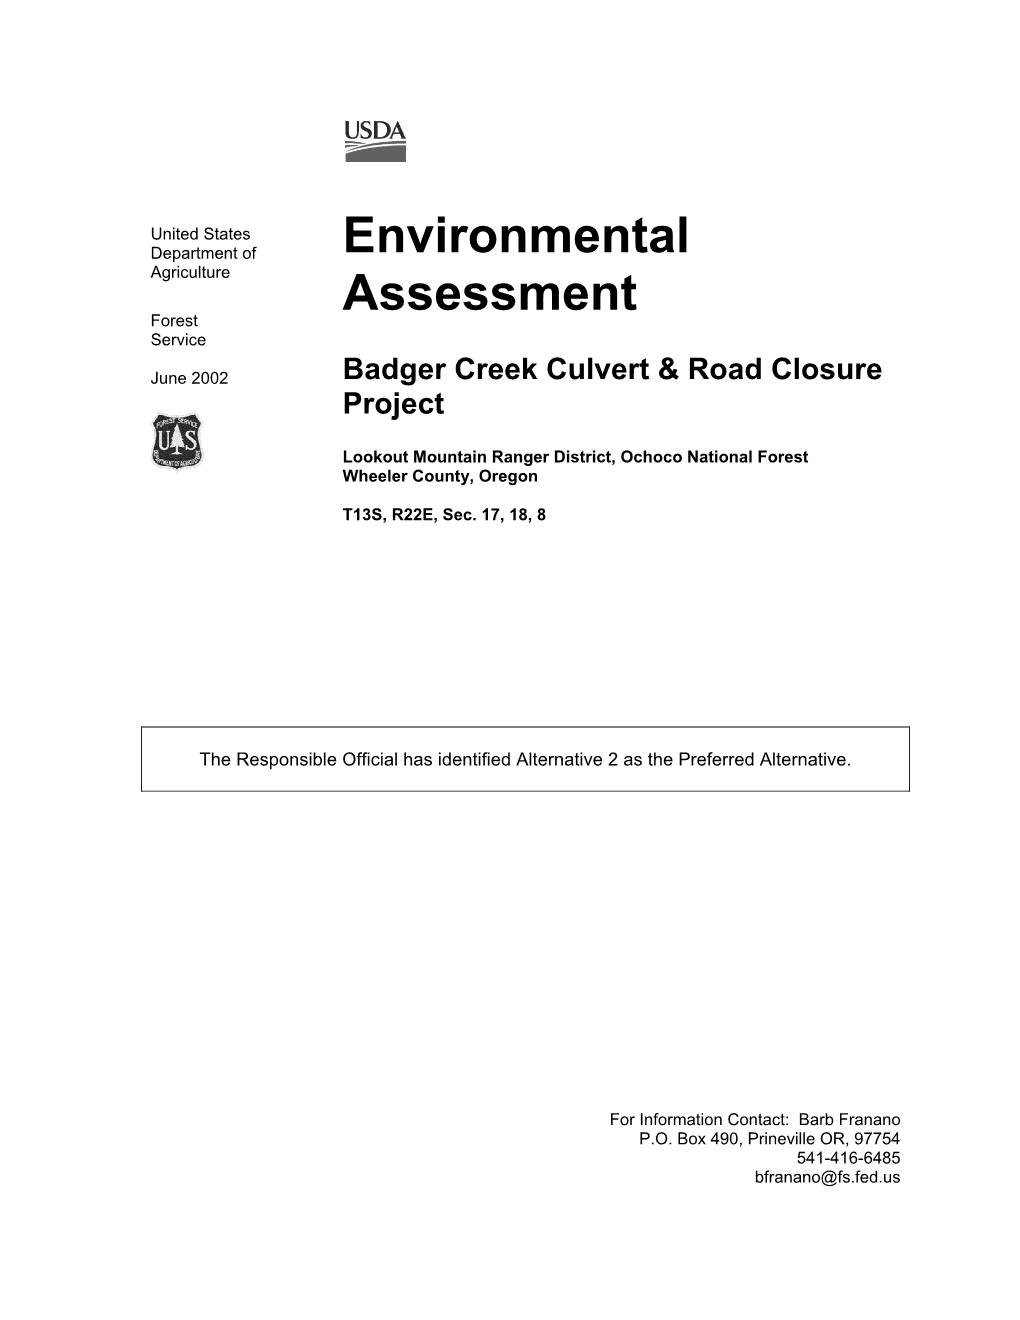 Environmental Assessment Badger Creek Project